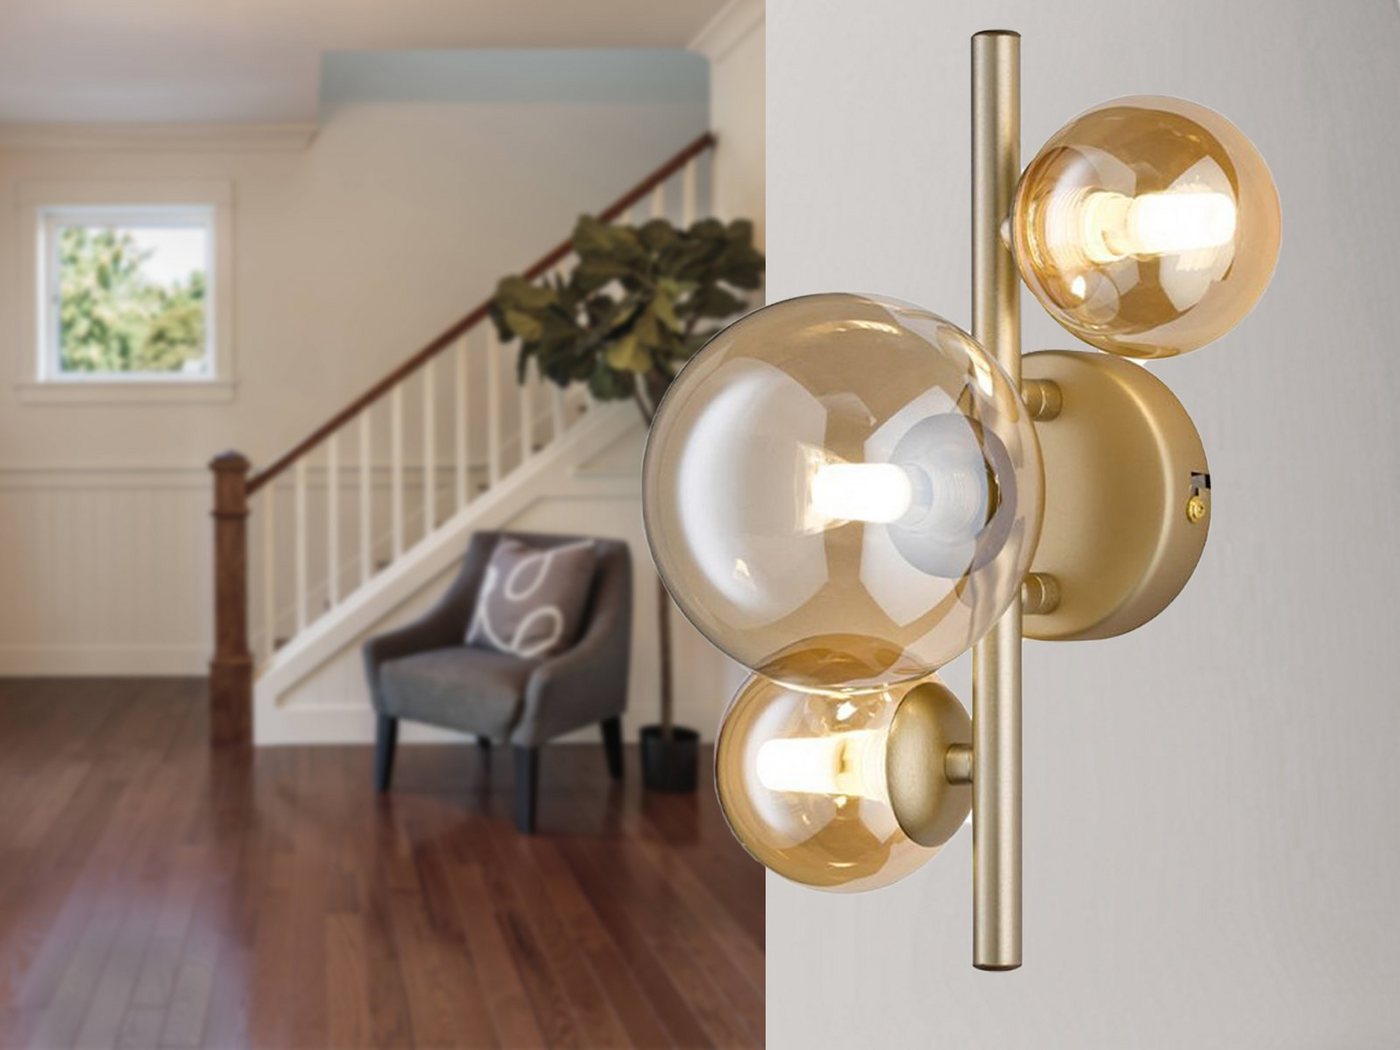 WOFI LED Wandleuchte, LED wechselbar, Warmweiß, innen, ausgefallene Bubble Lampe 4x Glas-kugel, Gold matt, Höhe 28cm von WOFI